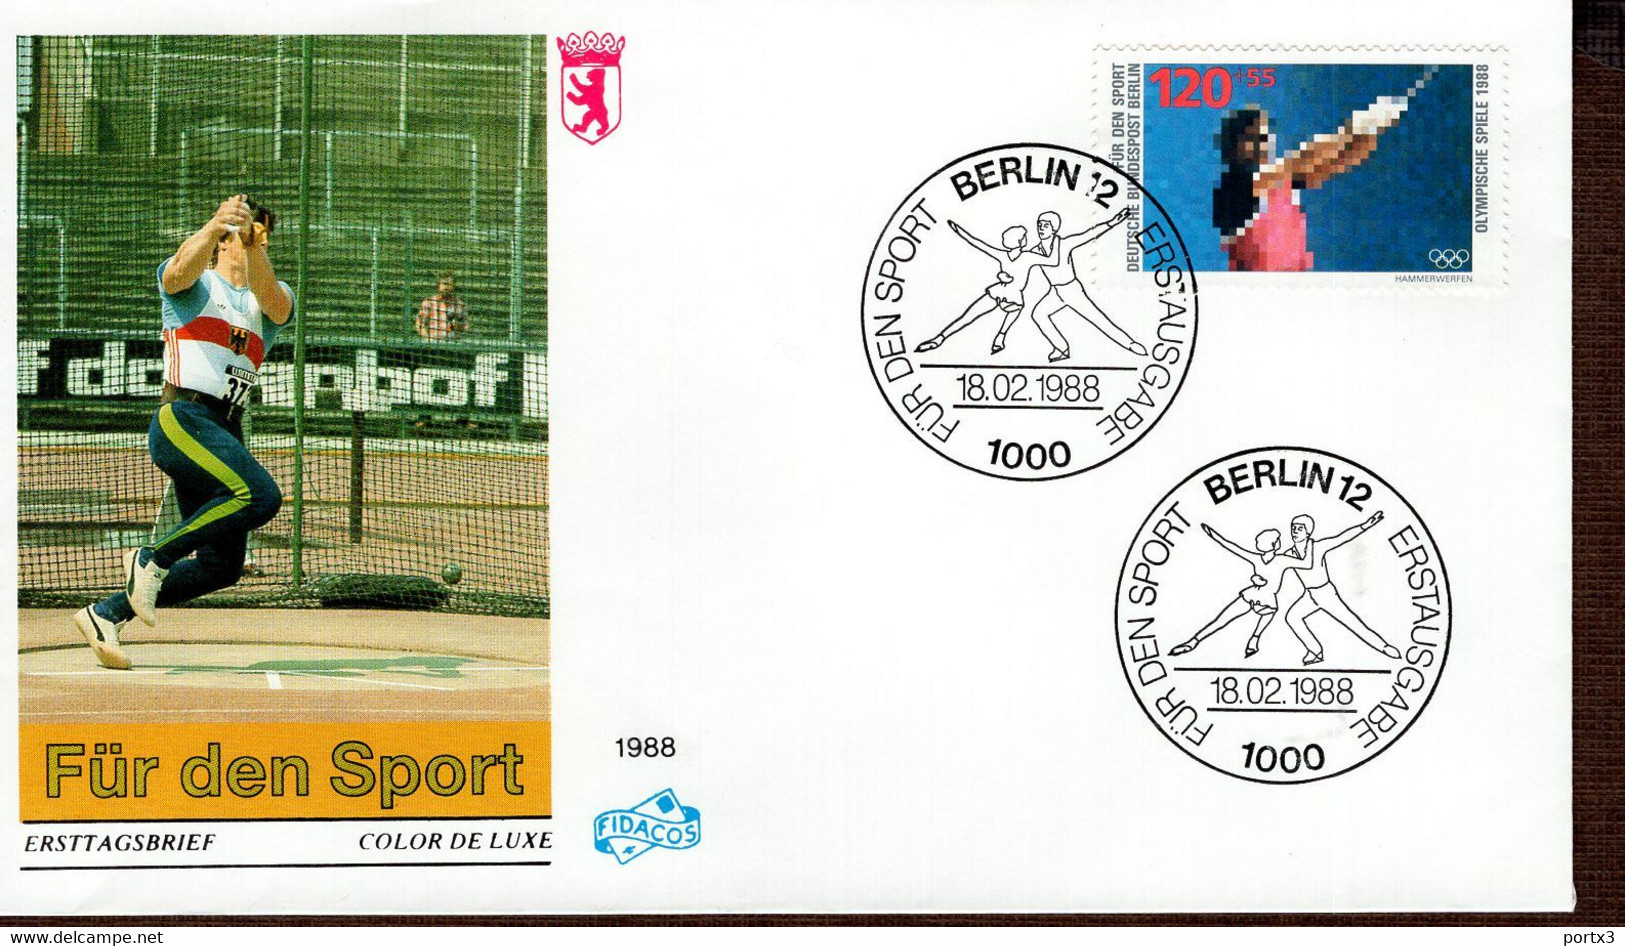 Berlin FDC aus 1988 ex 9 items  gestempelt / used / oblitéré (Berl 045)